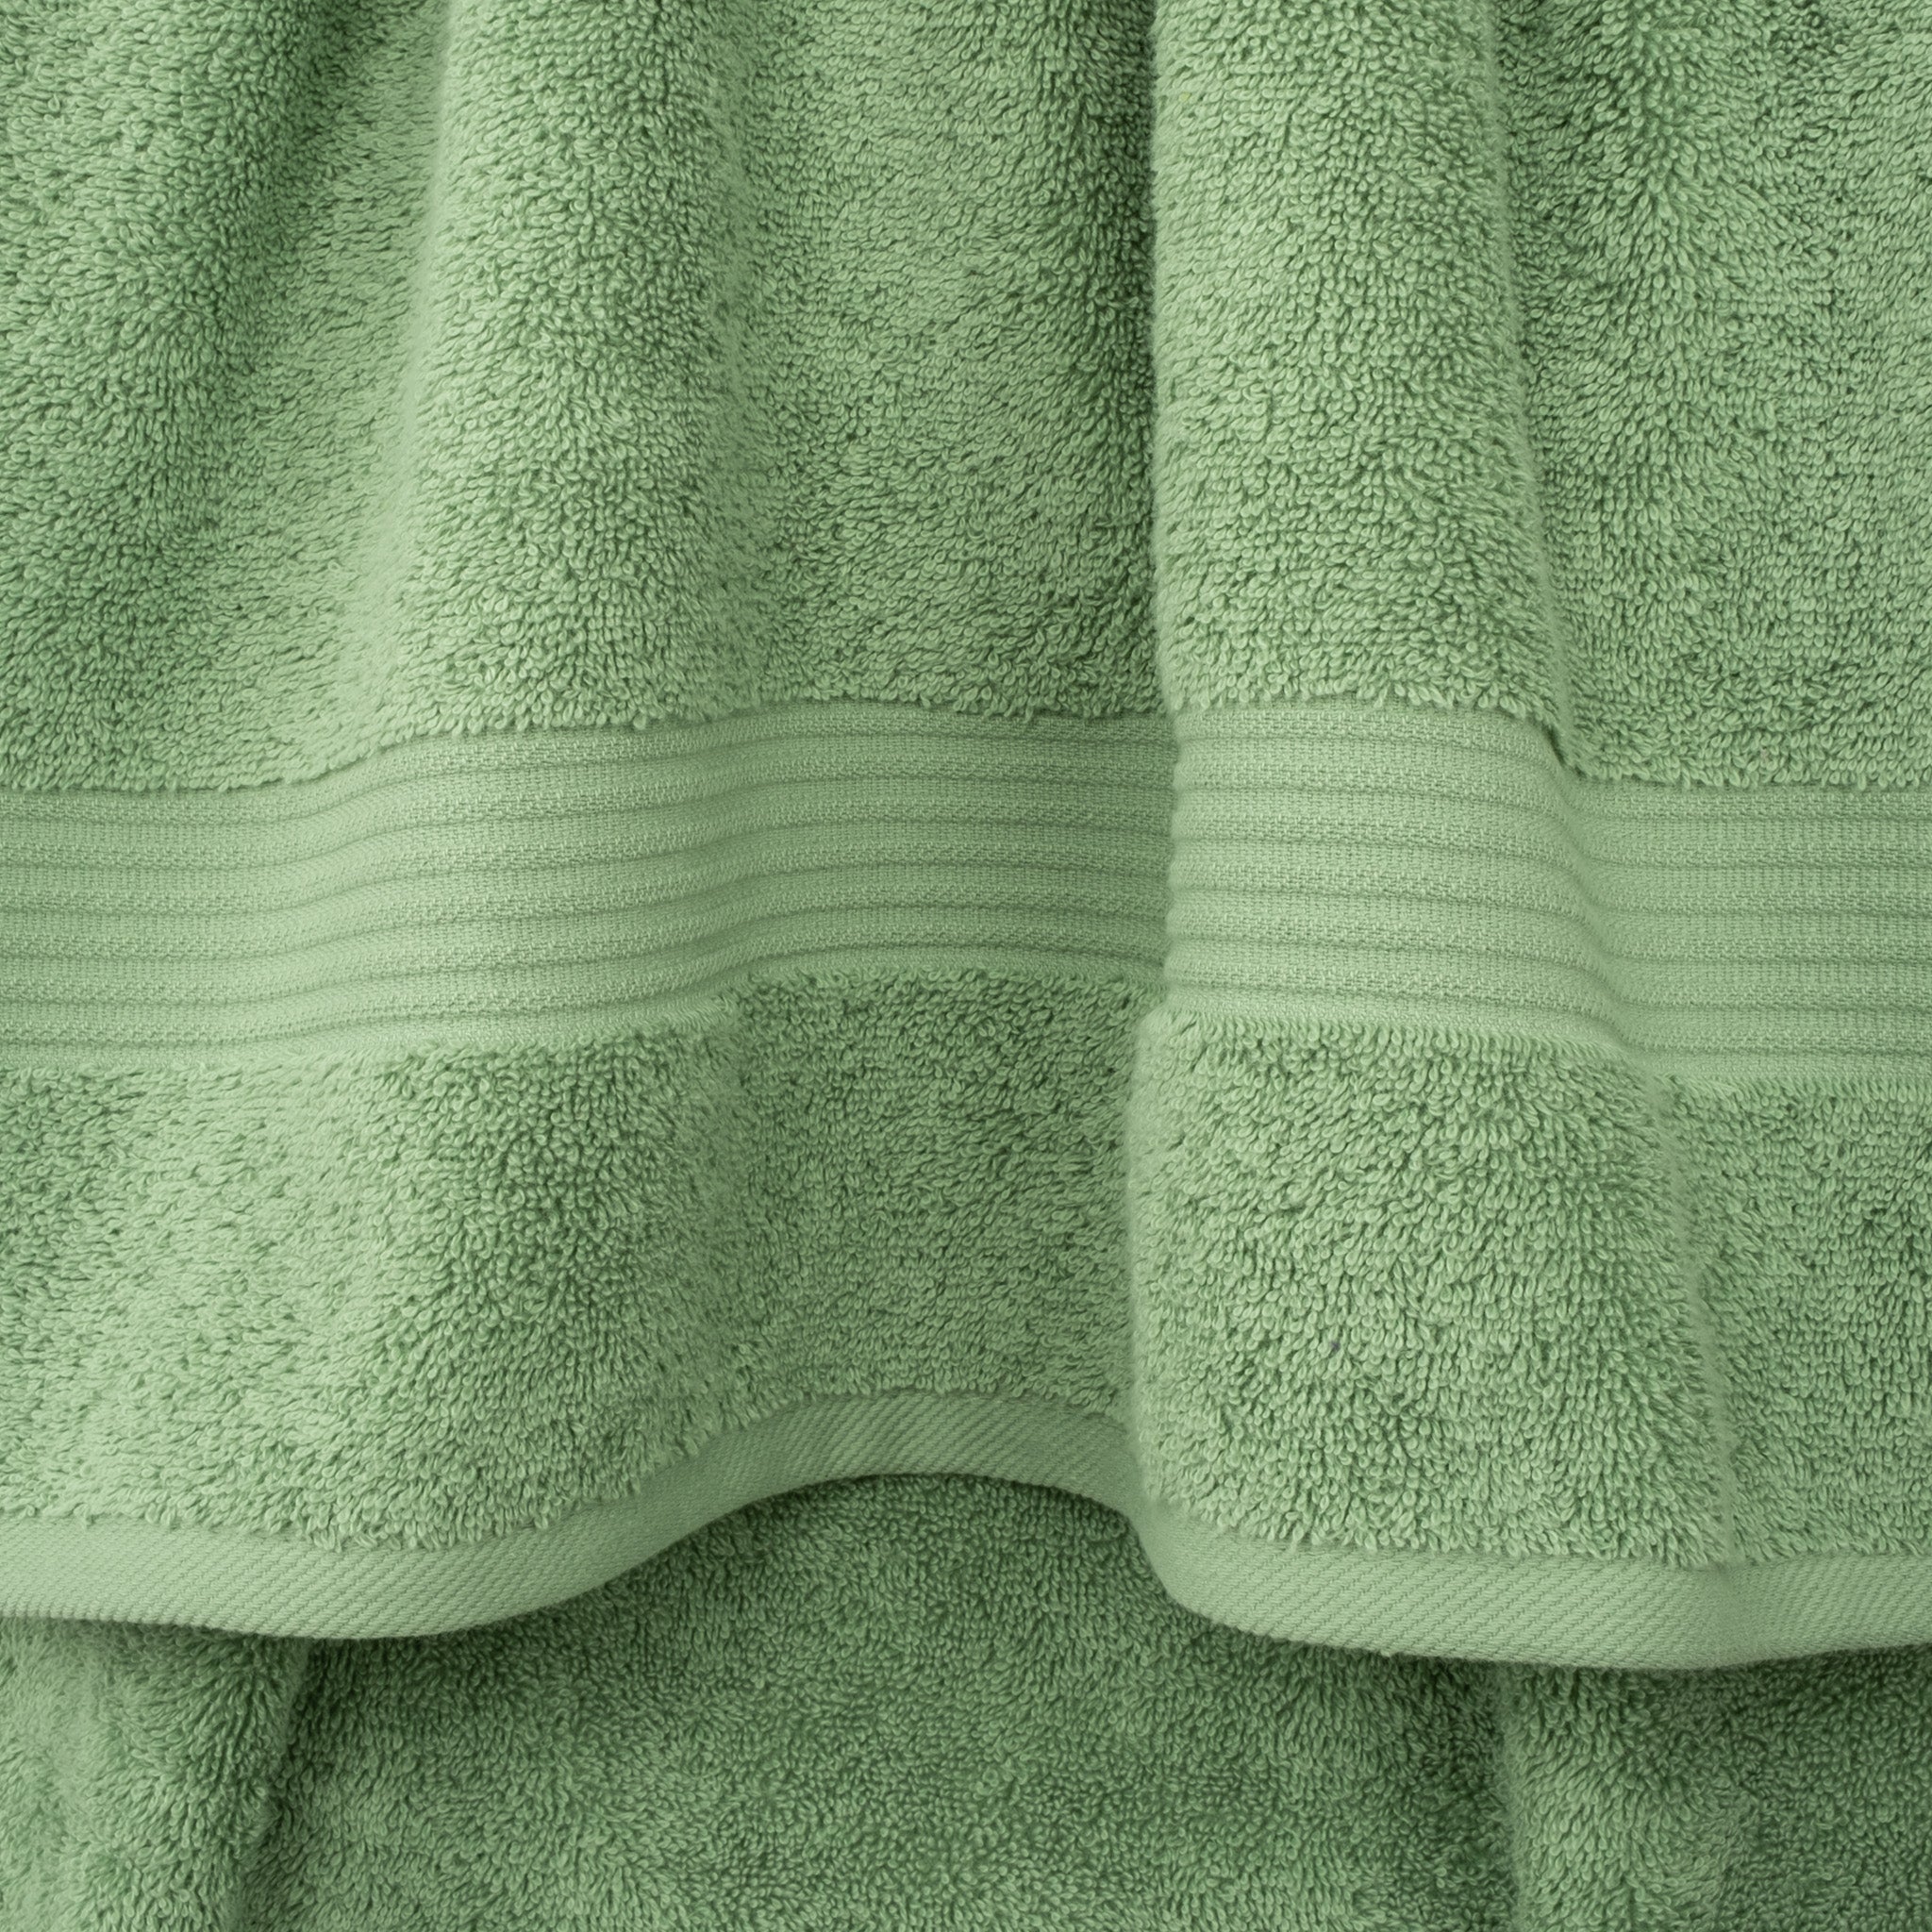 American Soft Linen Bekos 100% Cotton Turkish Towels, 4 Piece Washcloth Towel Set -sage-green-04